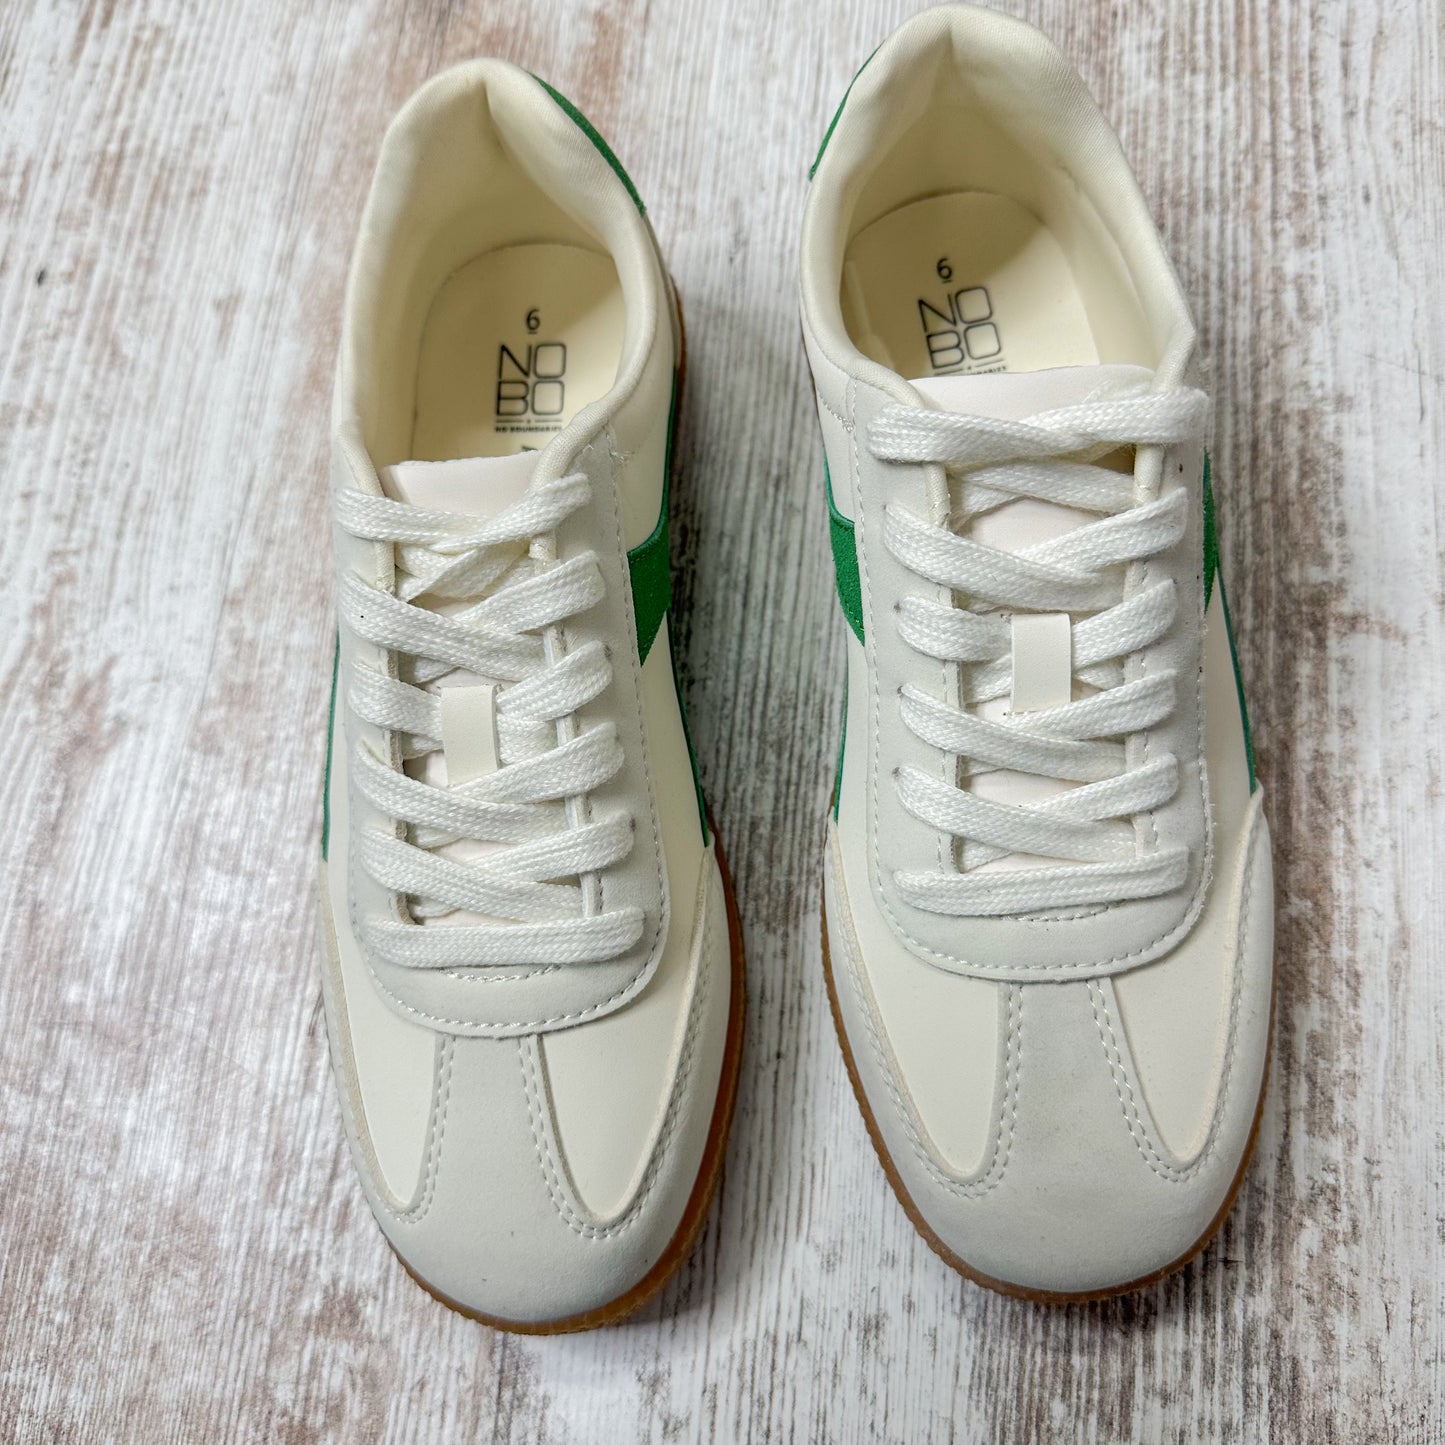 No Boundaries New Casual Green Sneaker (6)